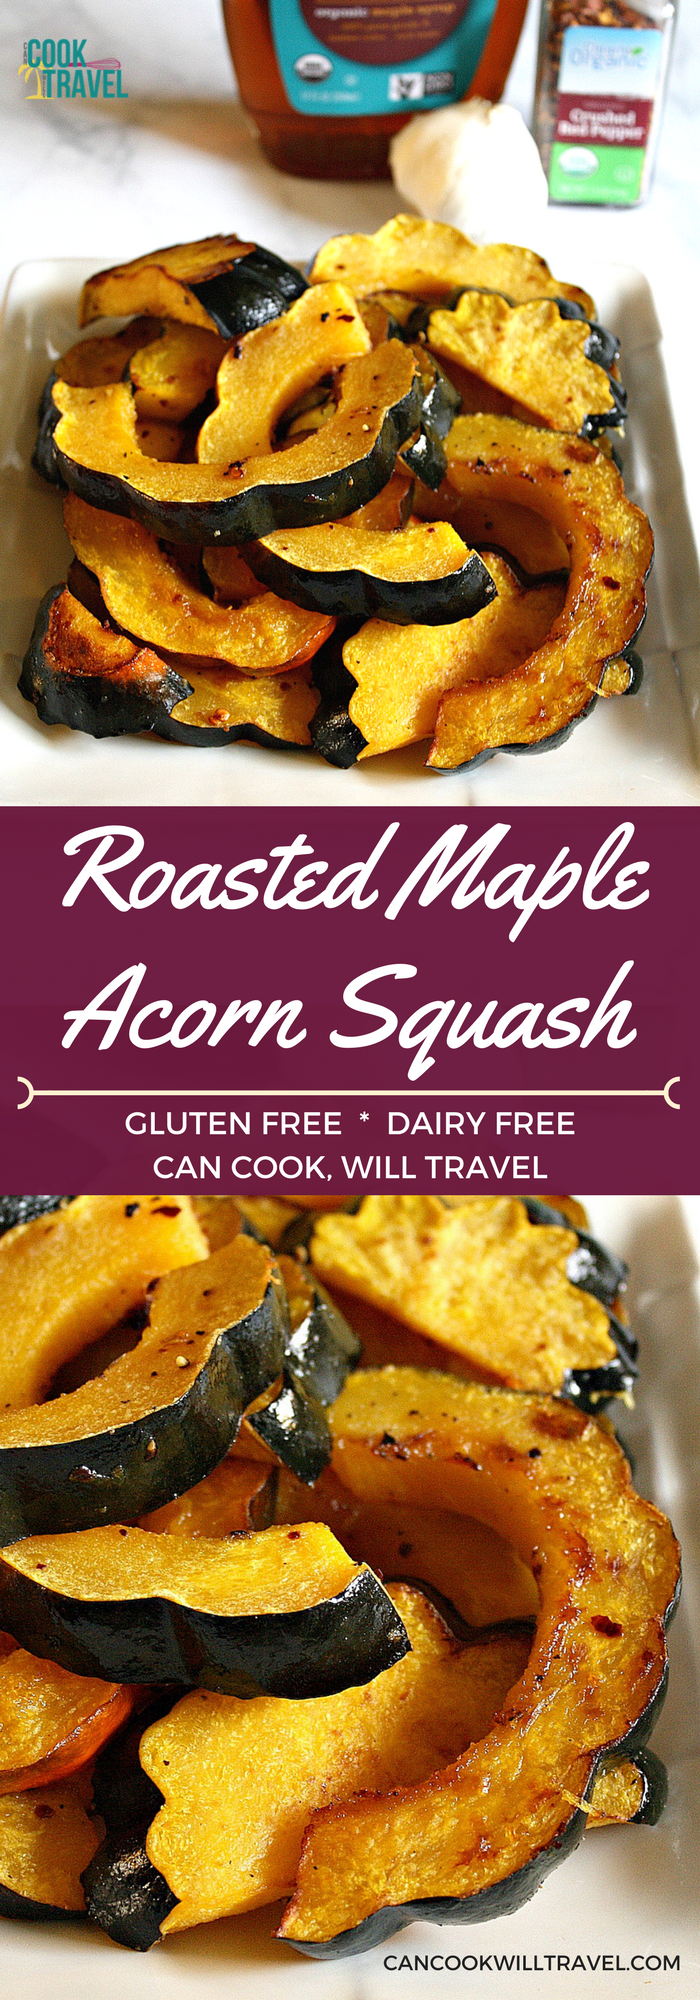 Roasted Maple Acorn Squash_Collage1